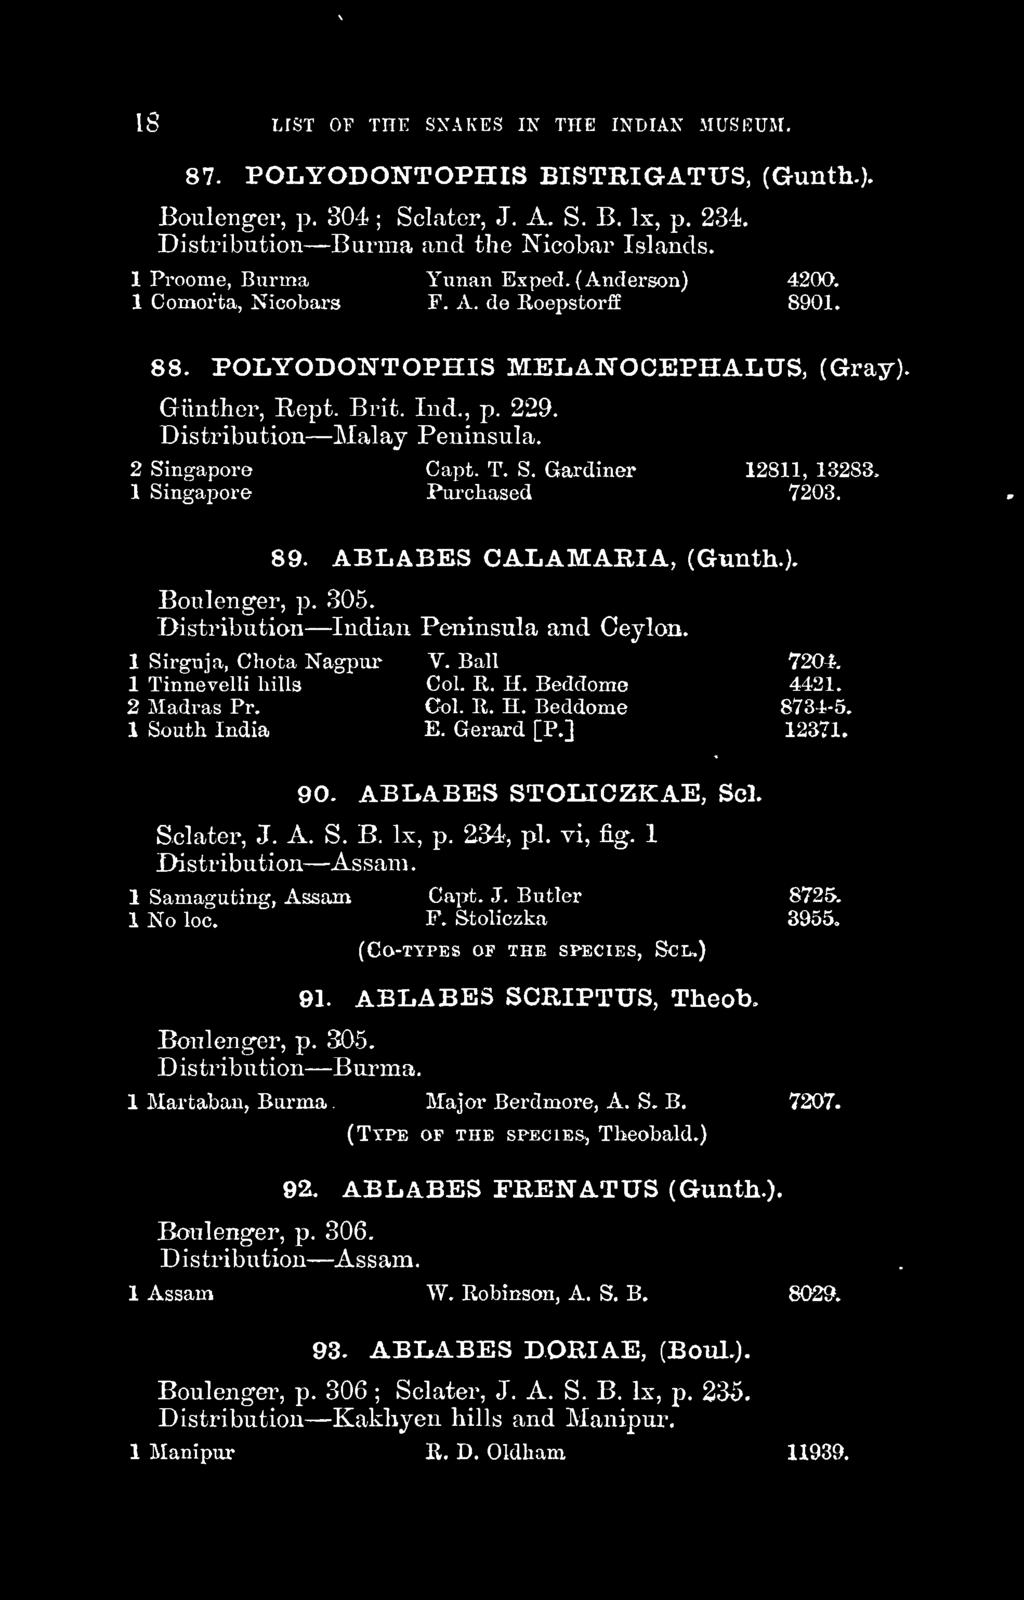 2 Singapore Capt. T. S. Gardiner 12811, 13283. 1 Singapore Purchased 7203. 89. ABLABES CALAMARIA, (Gunth.). Boulenger, p. 305. Distribution Indian Peninsula and Ceylon. 1 Sirguja, Chota Nagpur V.